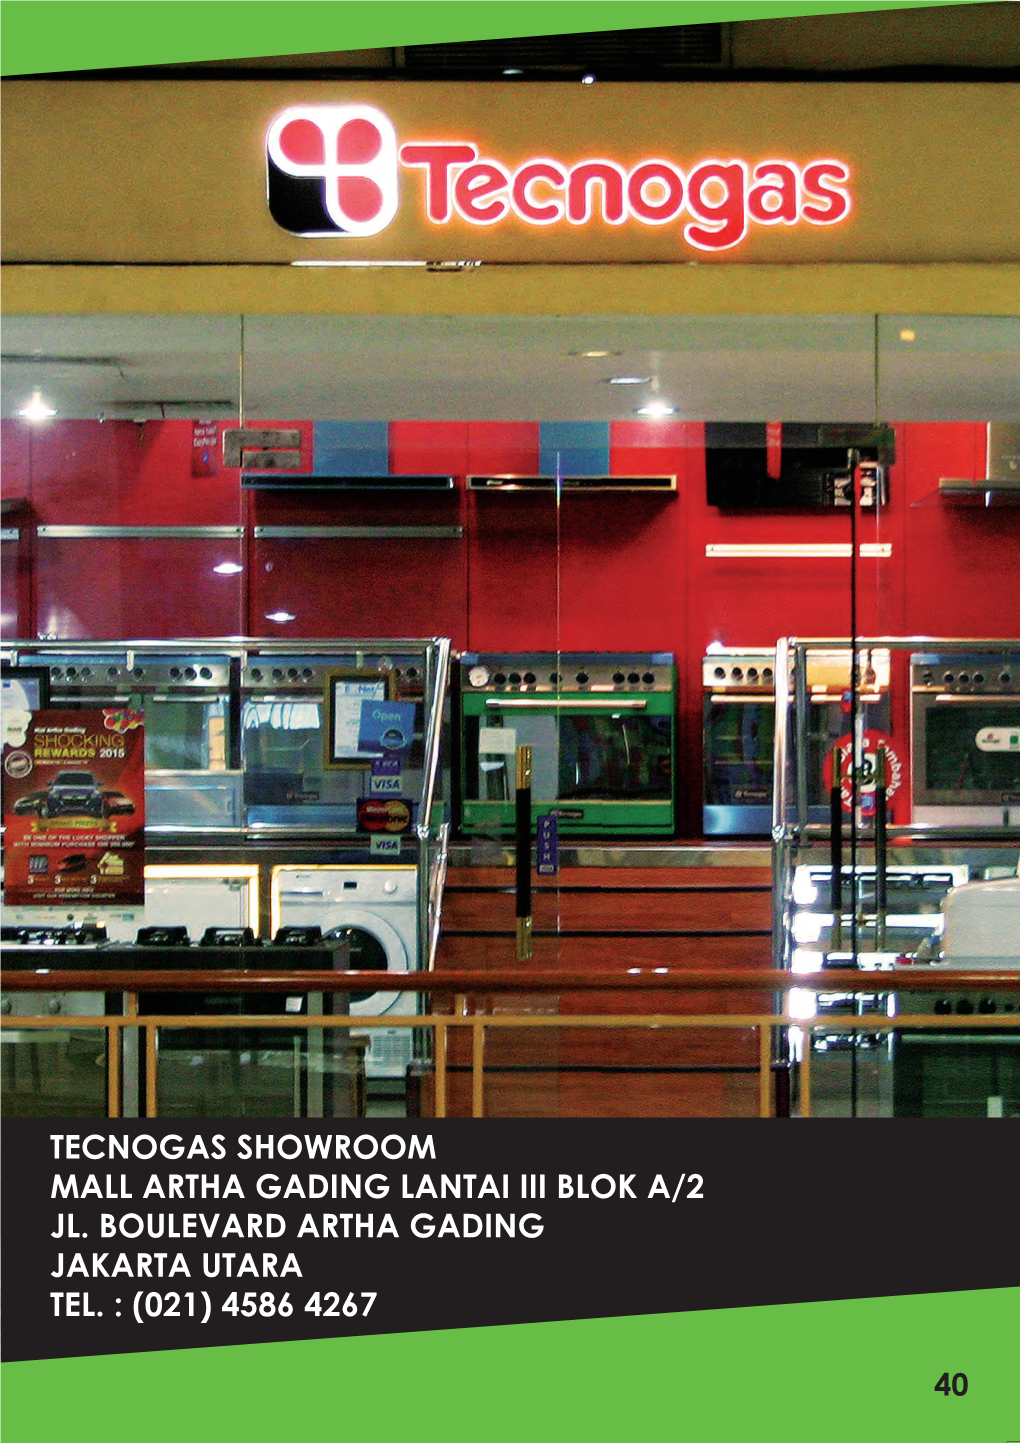 Tecnogas Showroom Mall Artha Gading Lantai Iii Blok A/2 Jl. Boulevard Artha Gading Jakarta Utara Tel